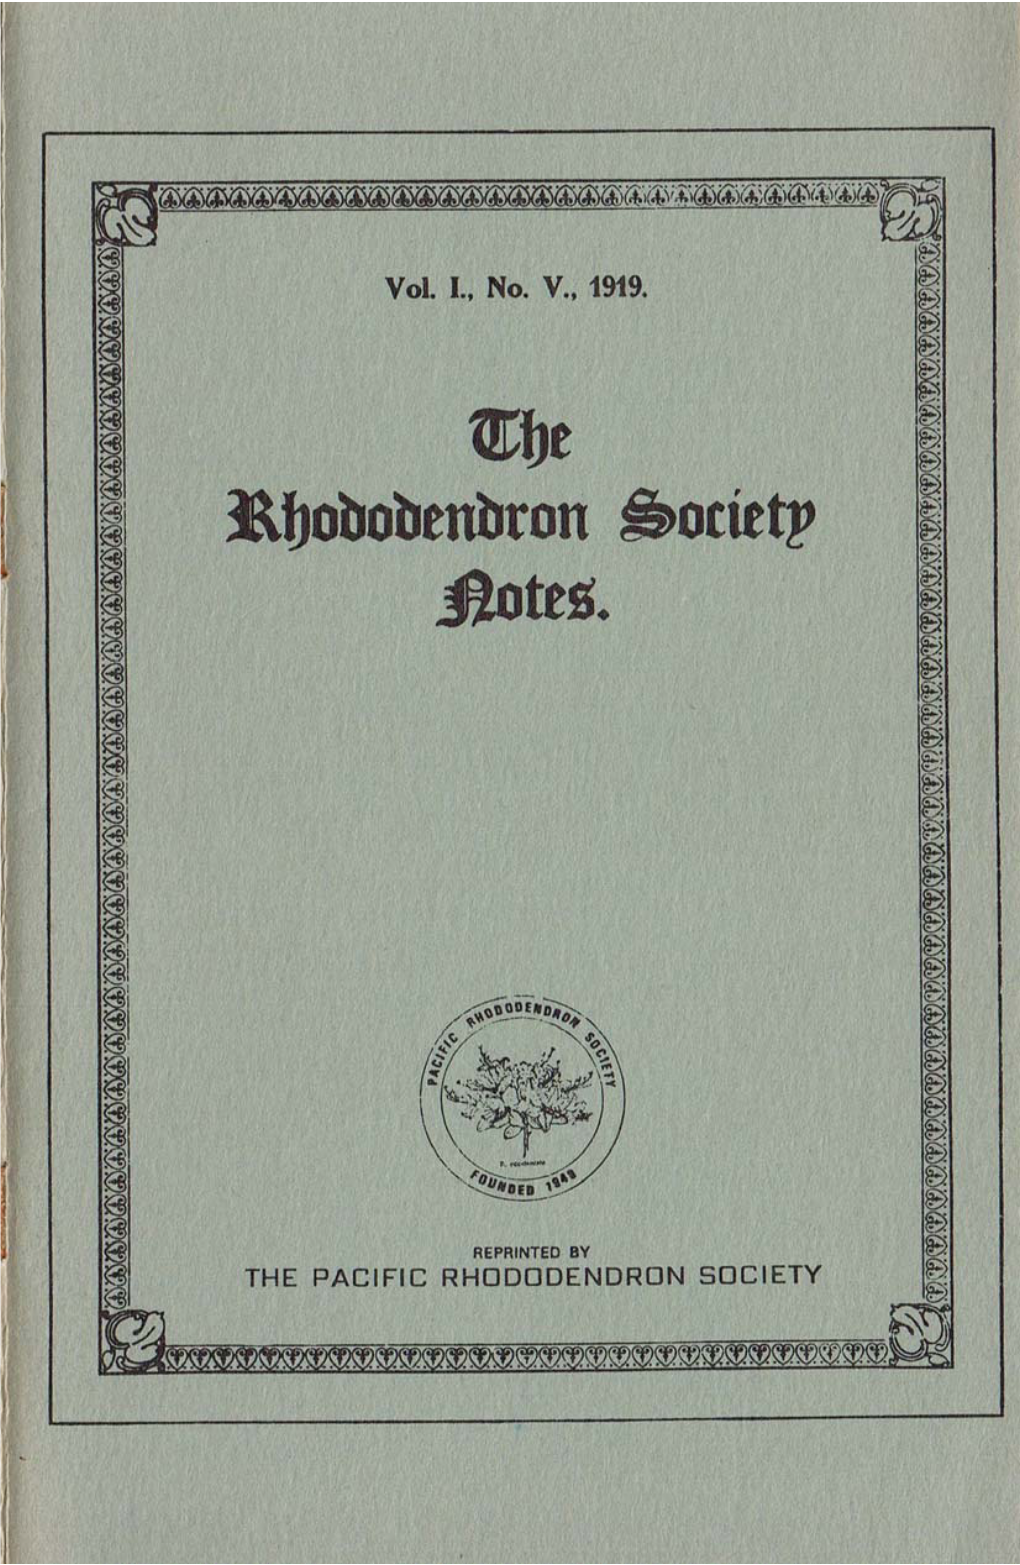 Rhododendron Society Notes Volume I.V 1919 for WEBSITE